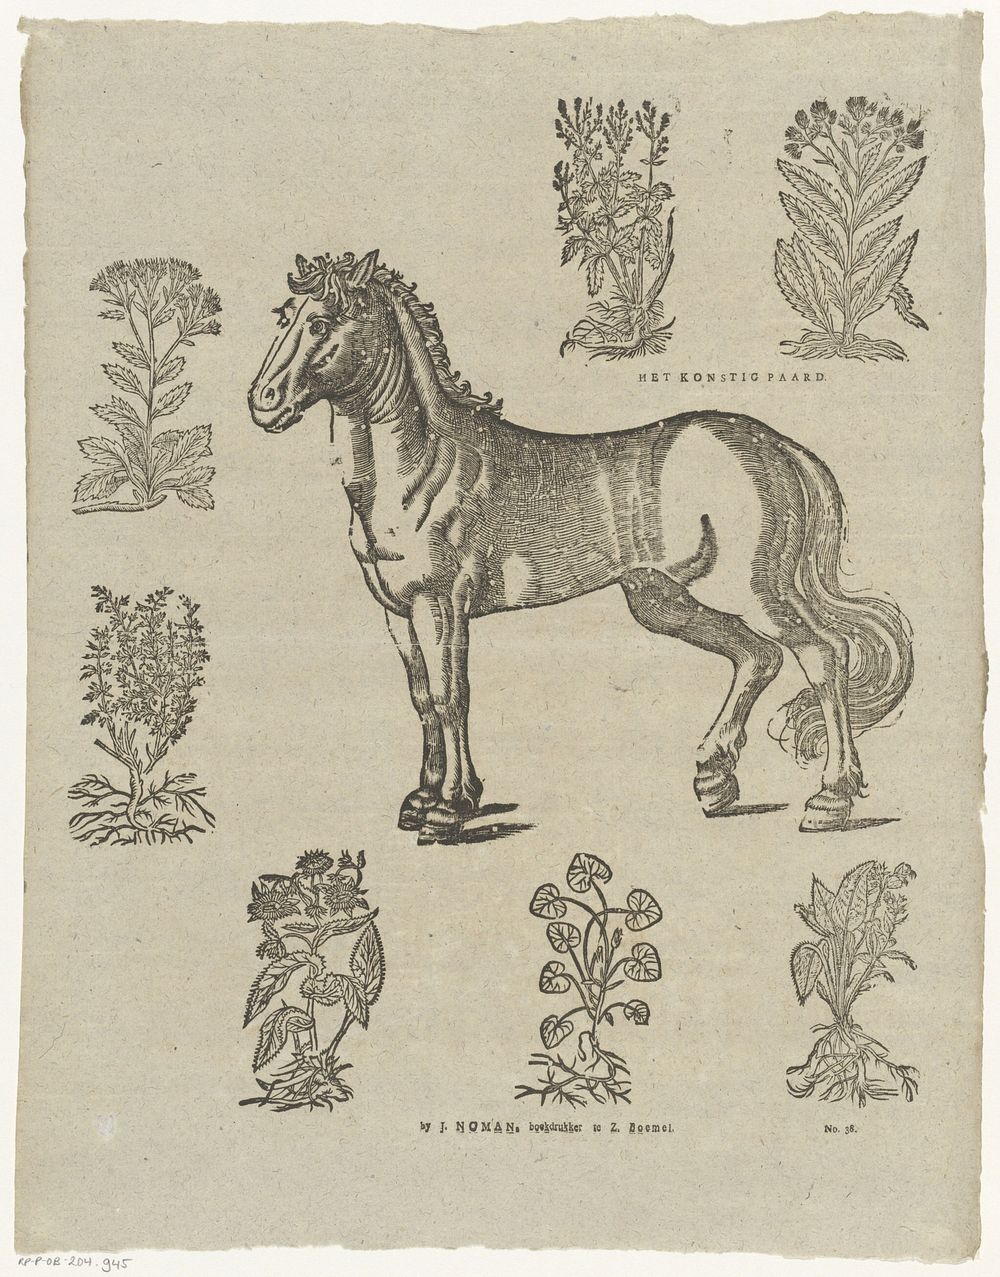 Het konstig paard (1806 - 1830) by Johan Noman and anonymous